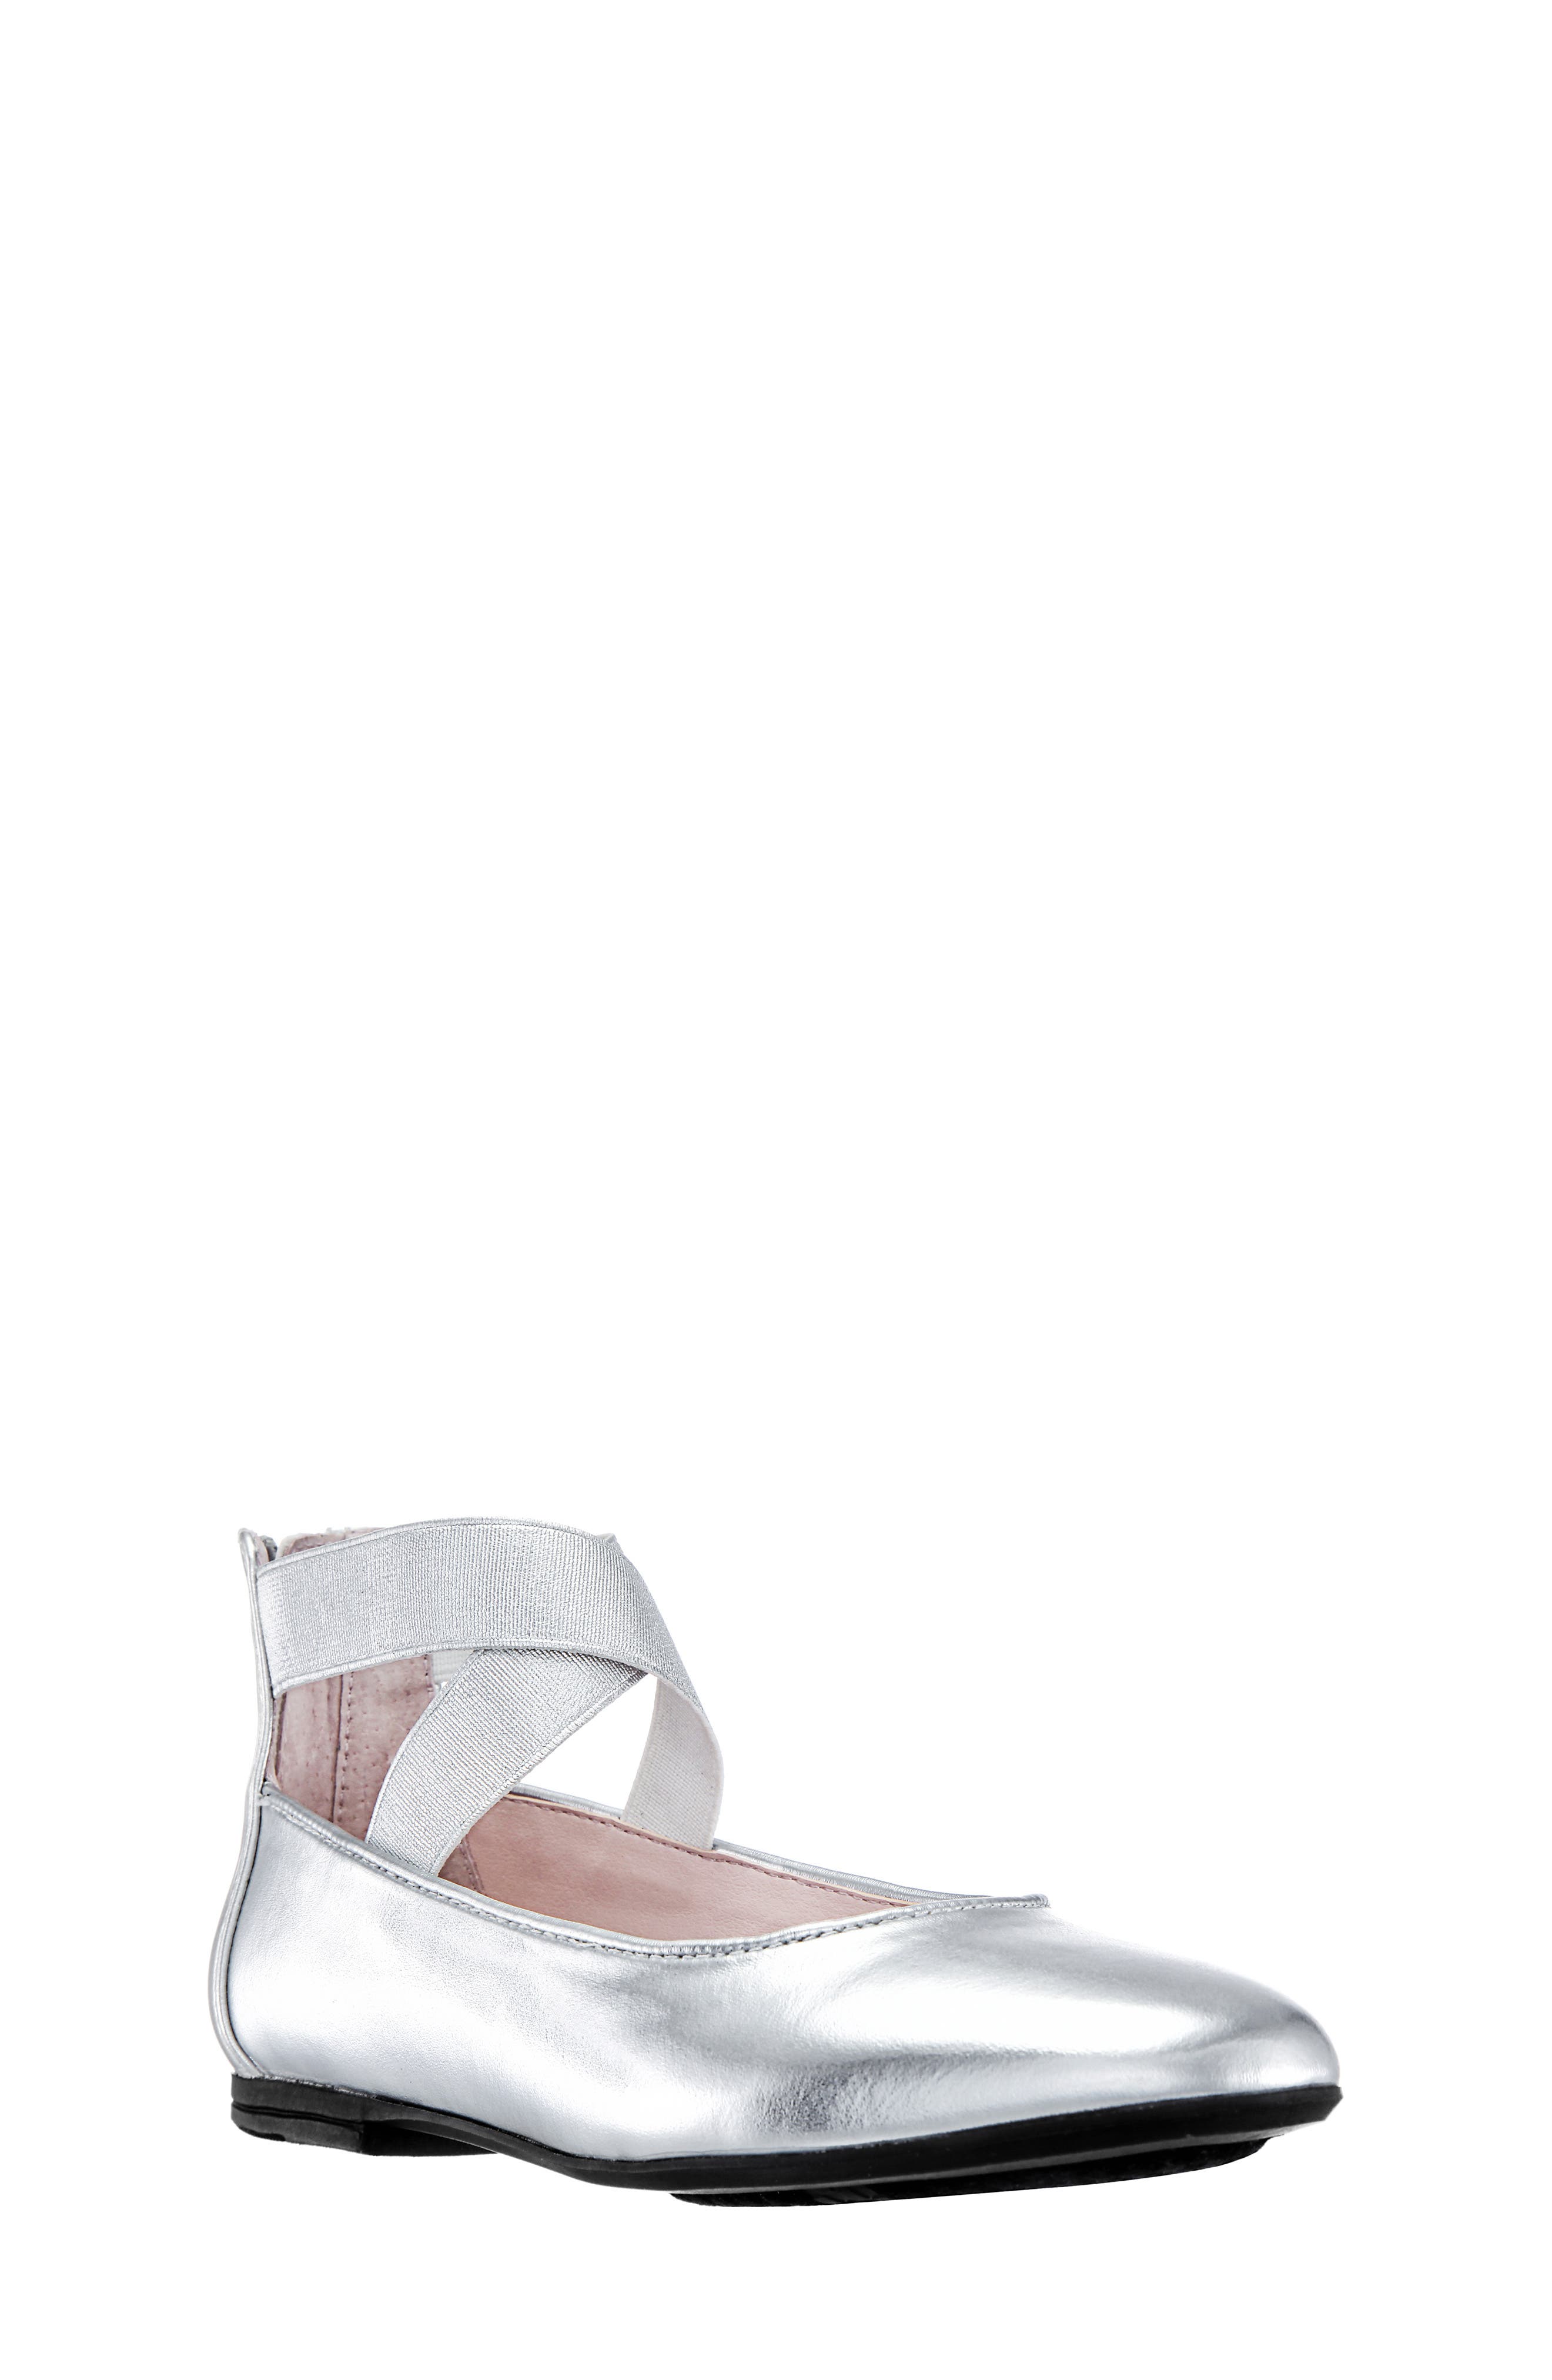 white flat communion shoes